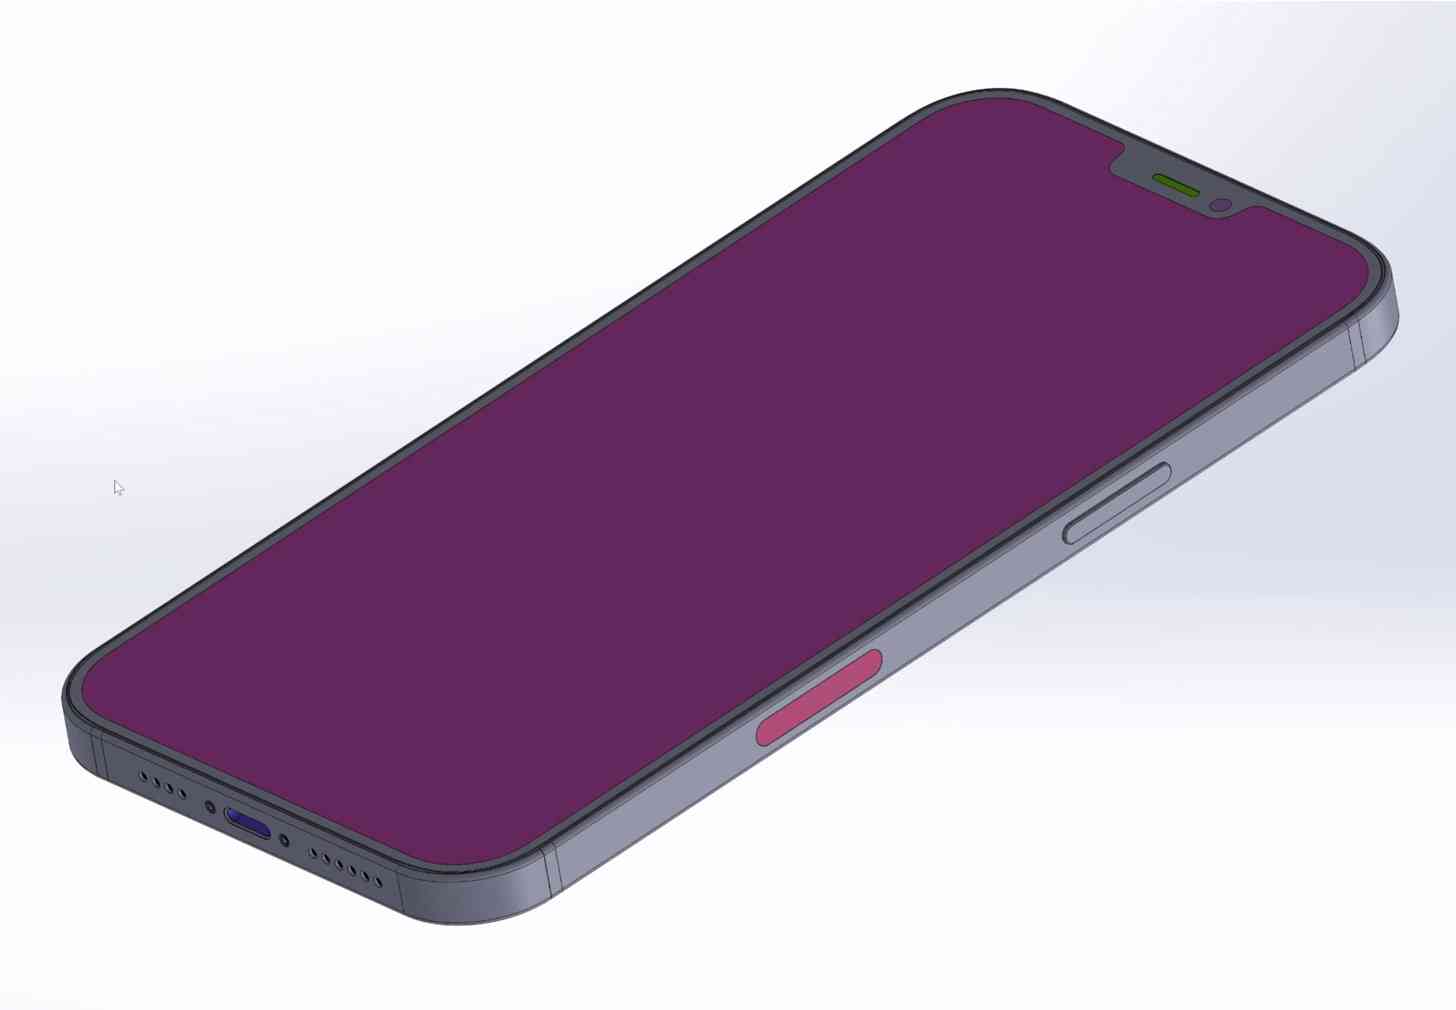 iPhone 12 Pro Max design CAD front